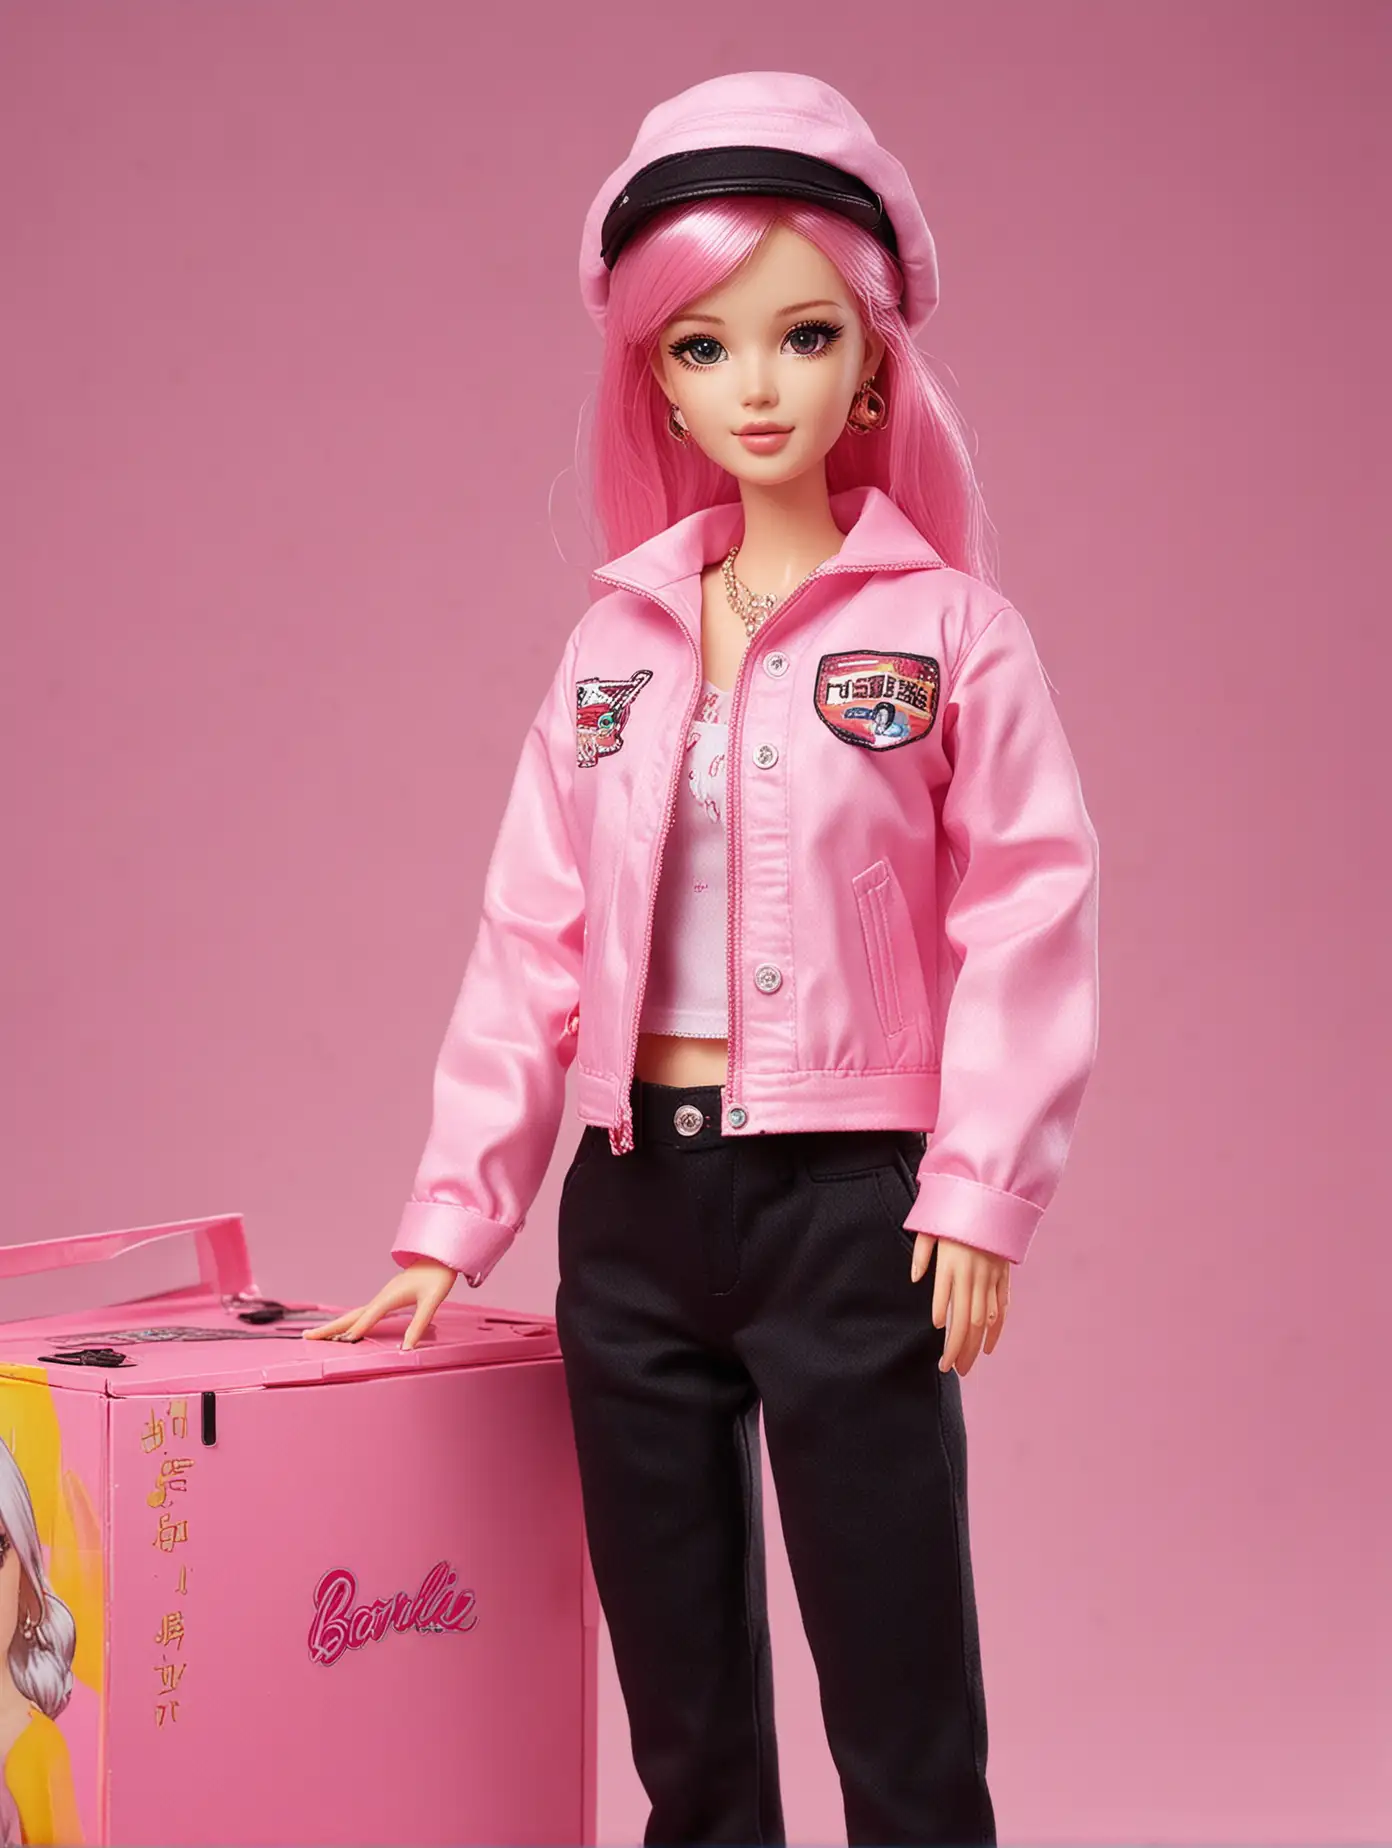 Teenage Barbie Doll Seo Yea-ji is Very Beautiful. Short rainbow hair. wearing a jacket, black hat, pants. in a very large pink plastic box.